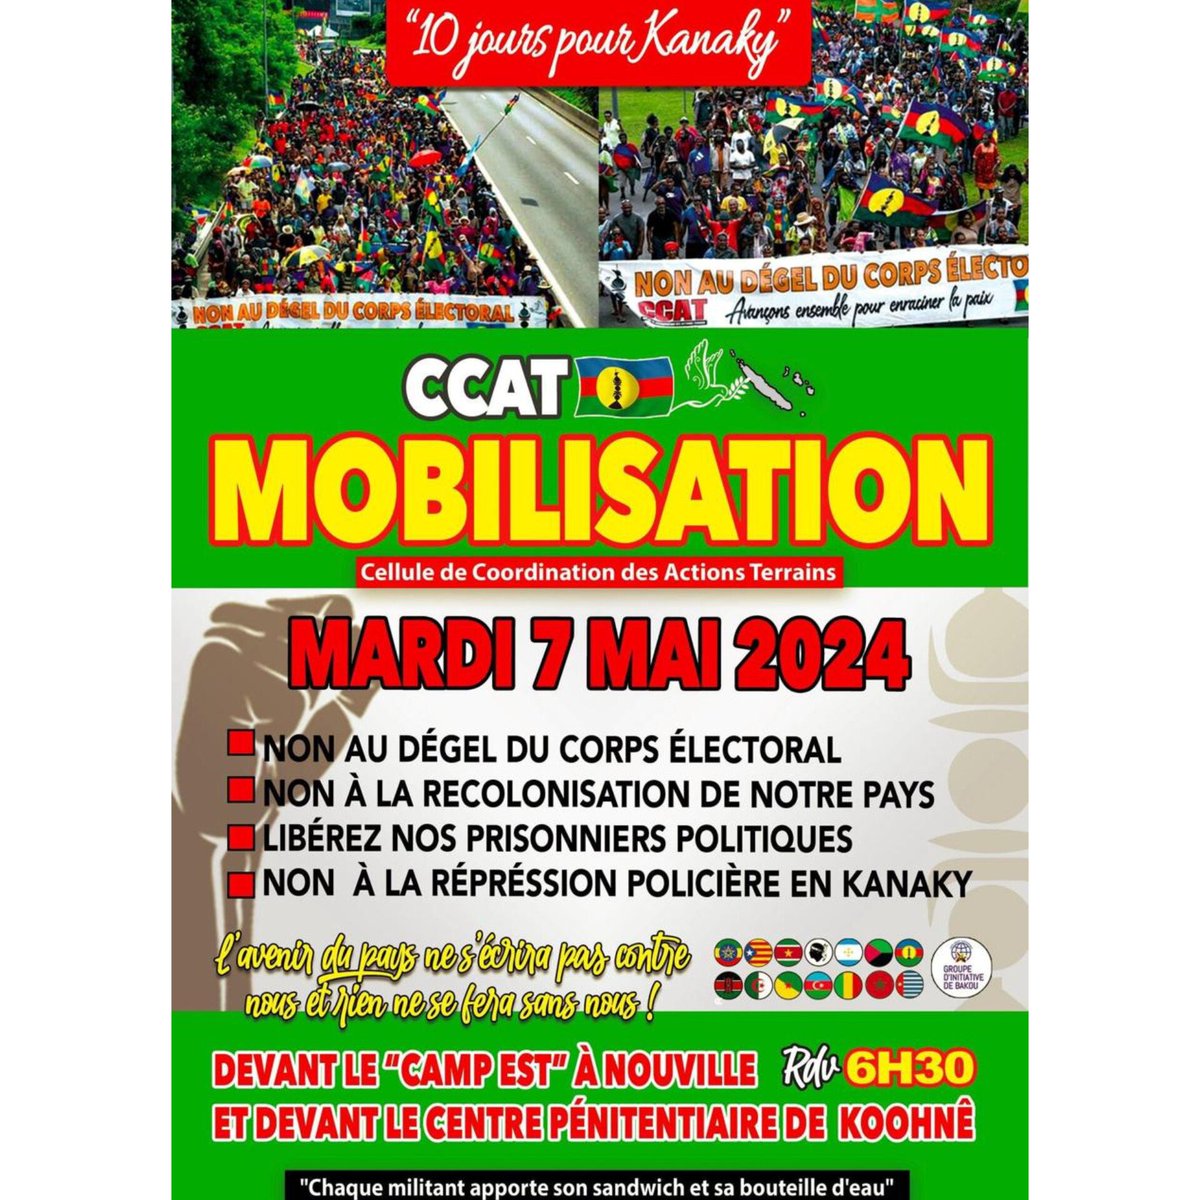 Mardi 7 mai 2024 #mobilisation 

#nonaudegelducorpselectoral #Kanakyforpeace #NouvelleCaledonie